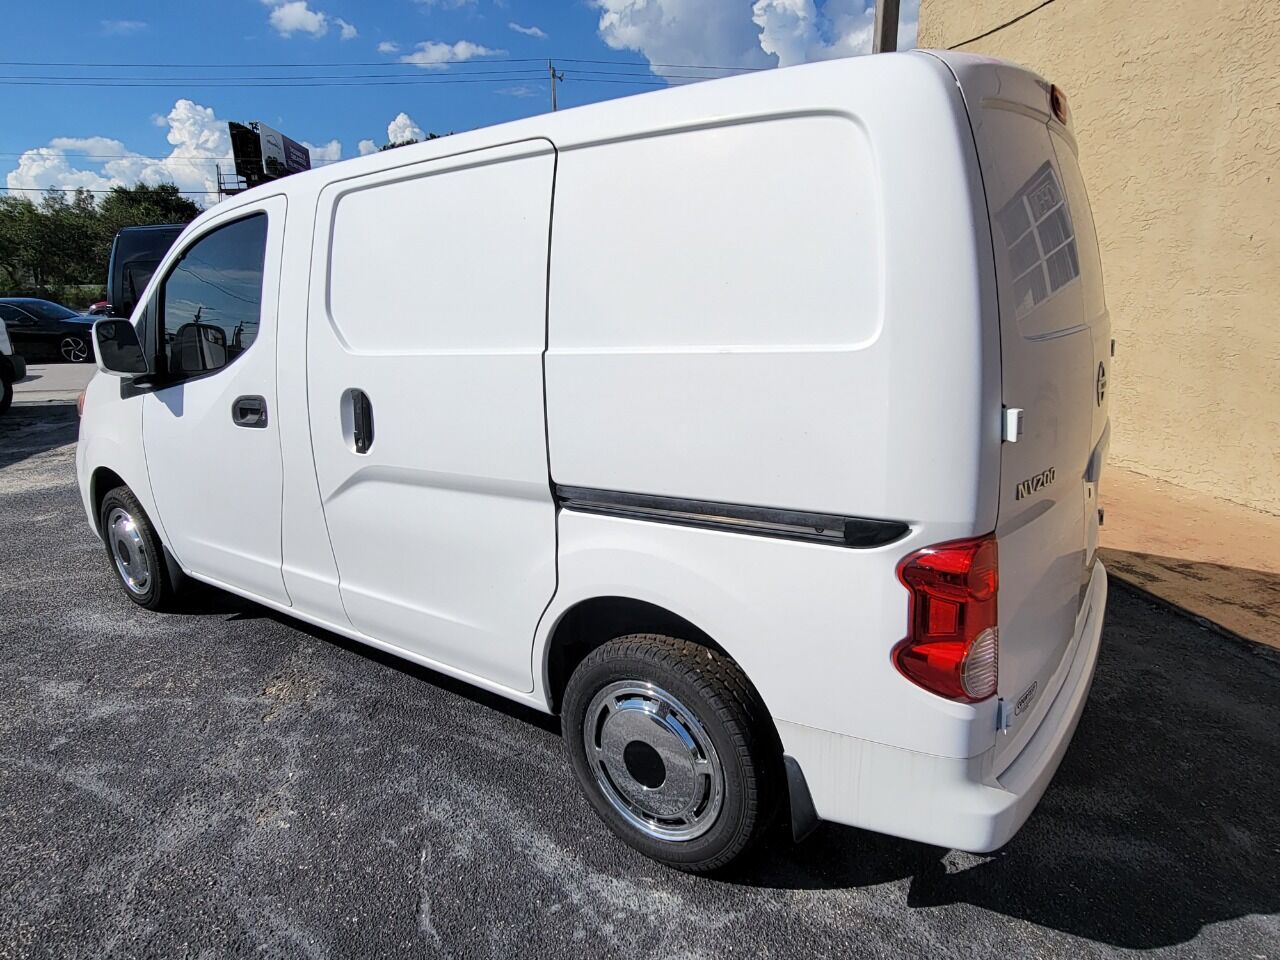 2018 NISSAN NV200 Van - $17,999